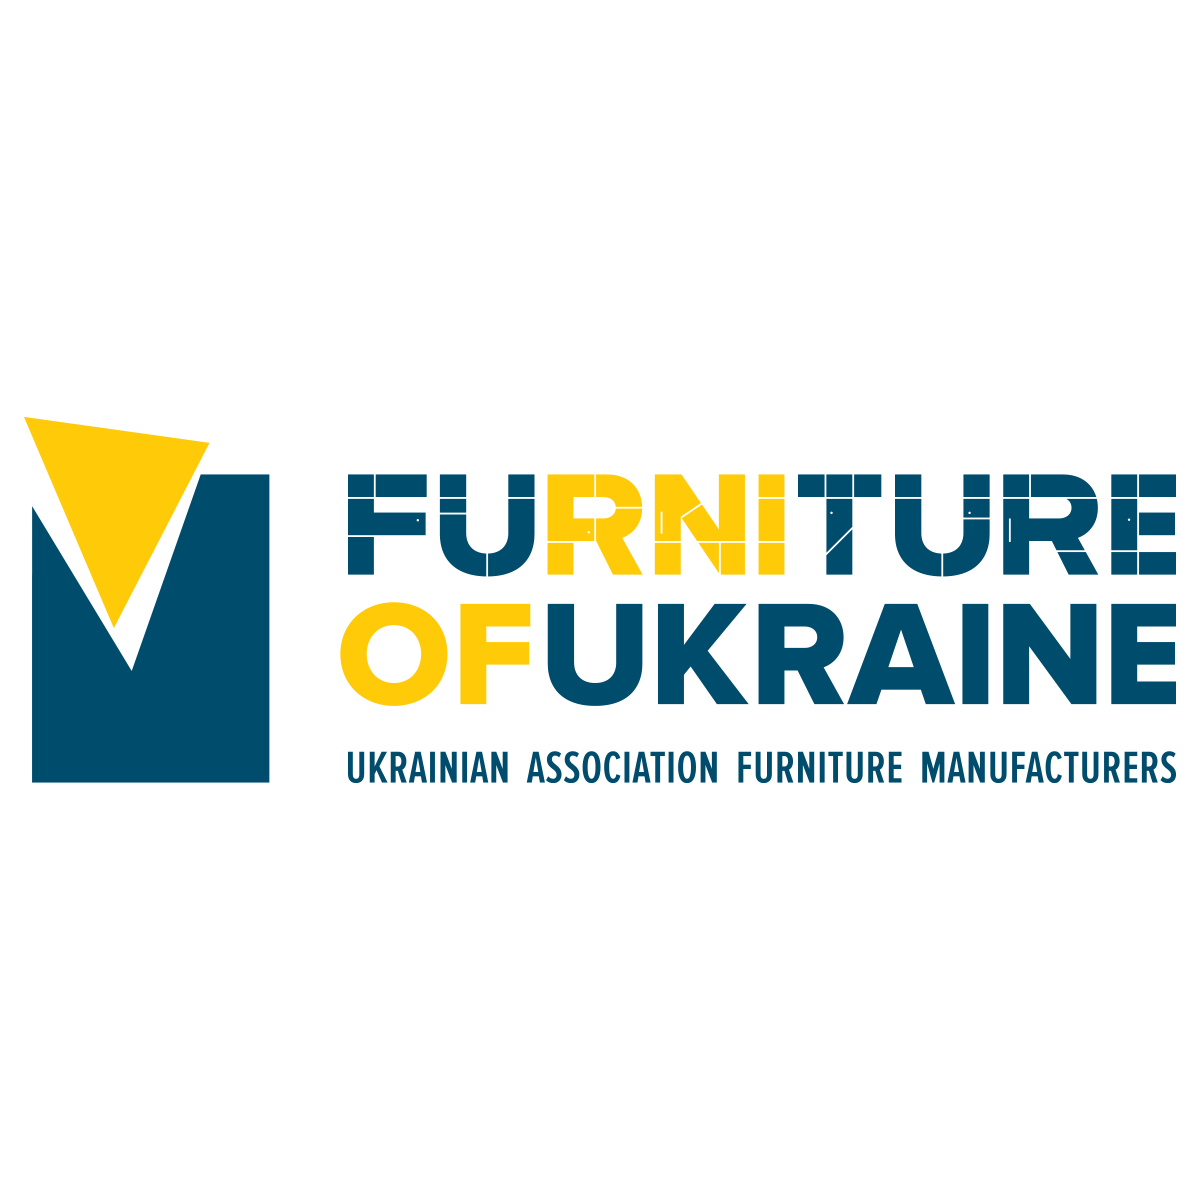 EXHIBITION FURNITURE OF UKRAINE LIMITED LIABILITY COMPANY